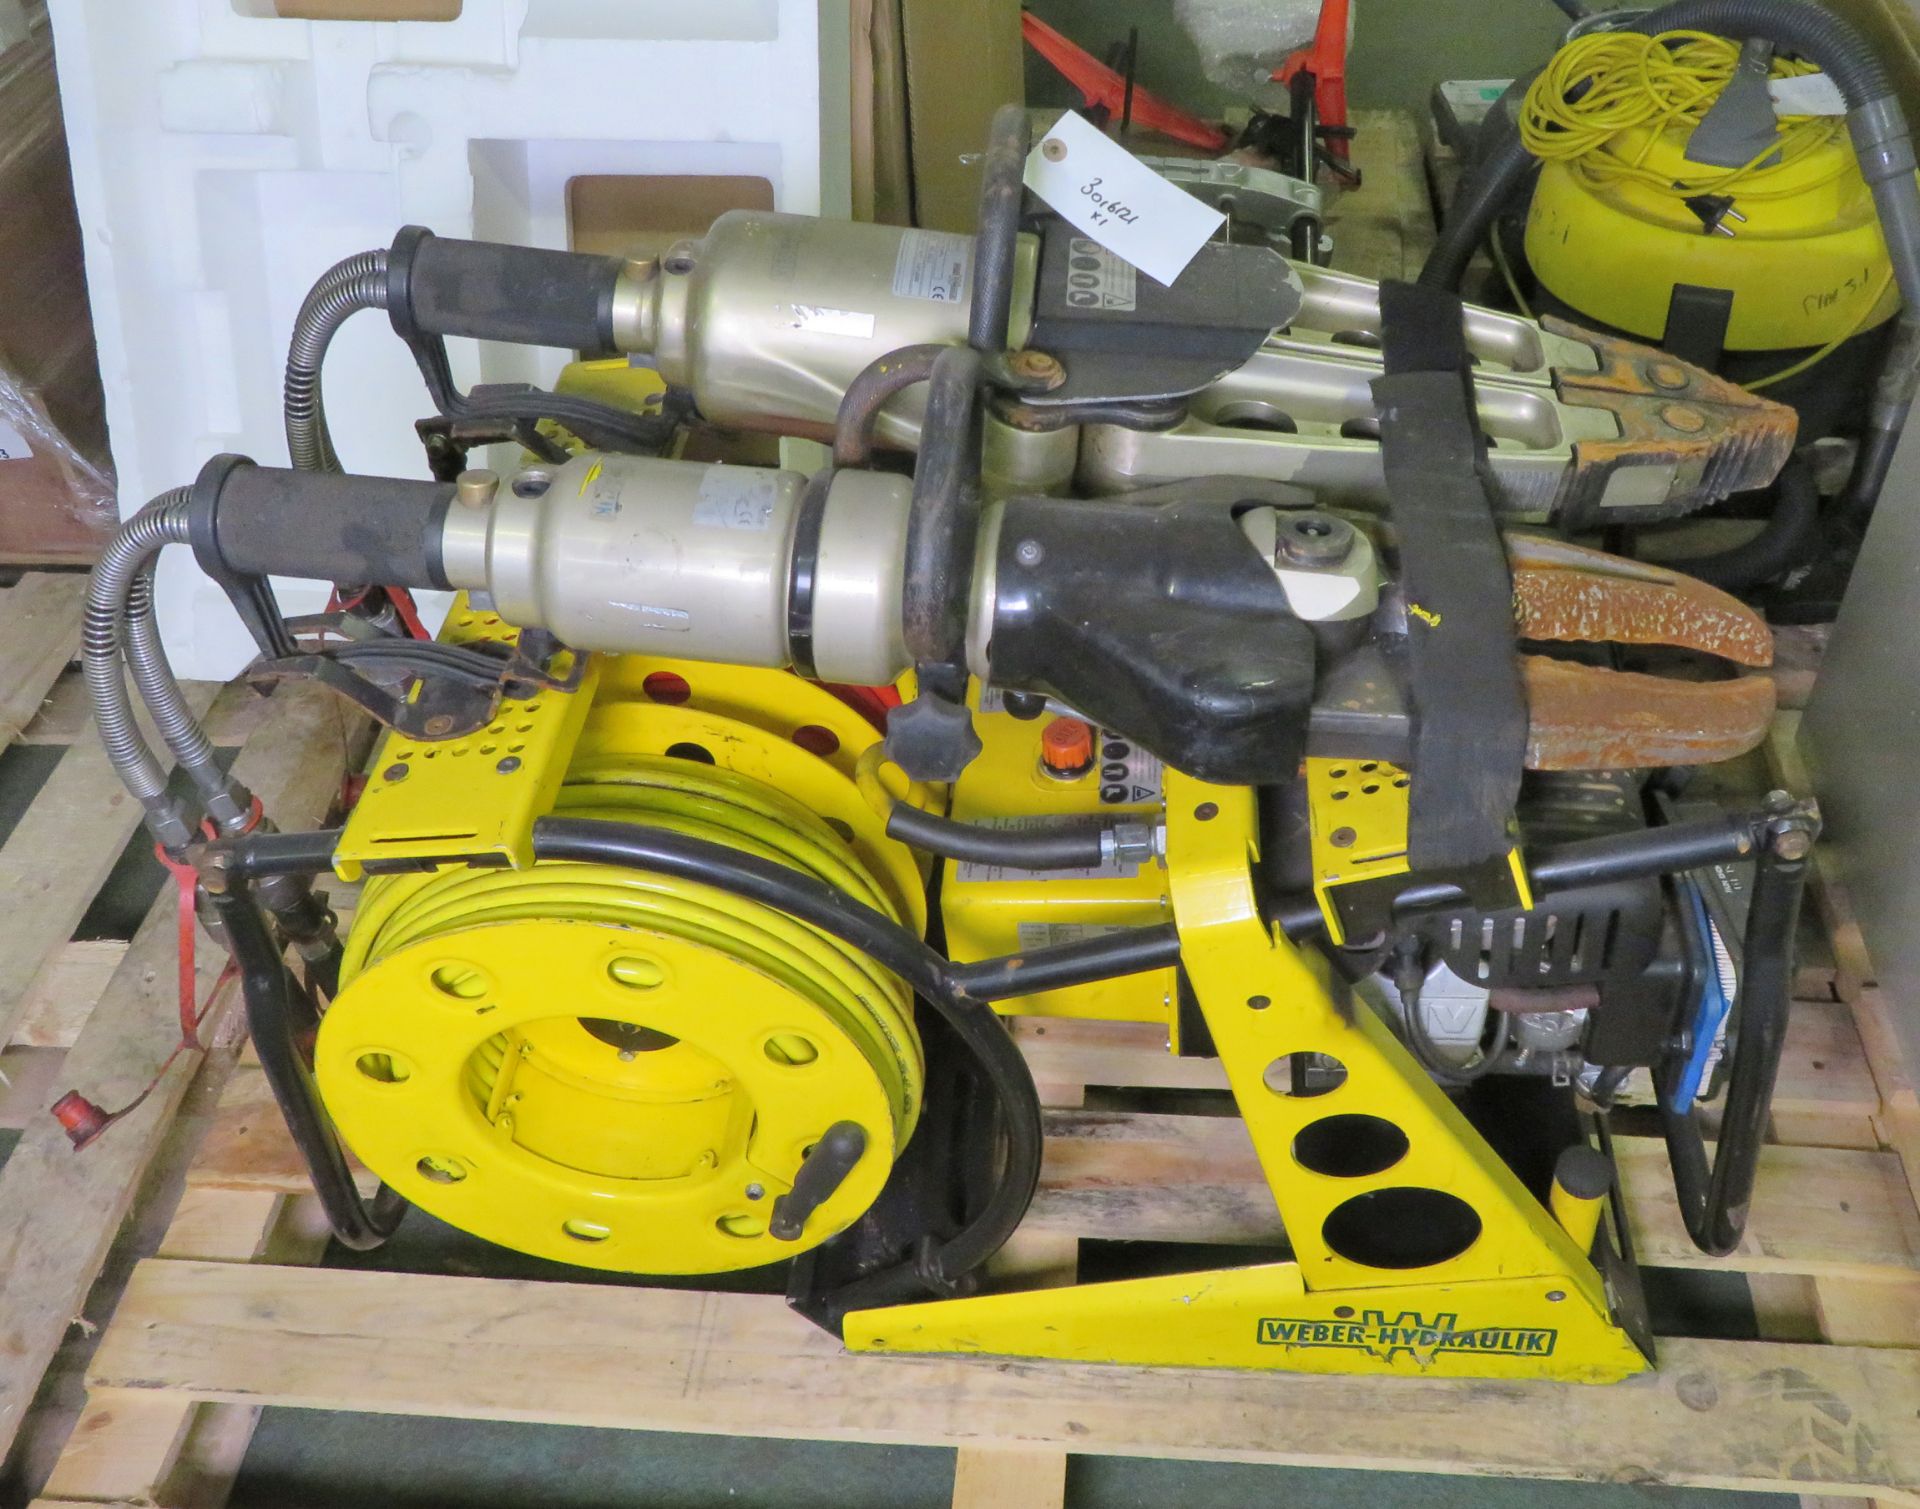 Weber Hydraulic Rescue Equipment & Accessories - cutter, spreader